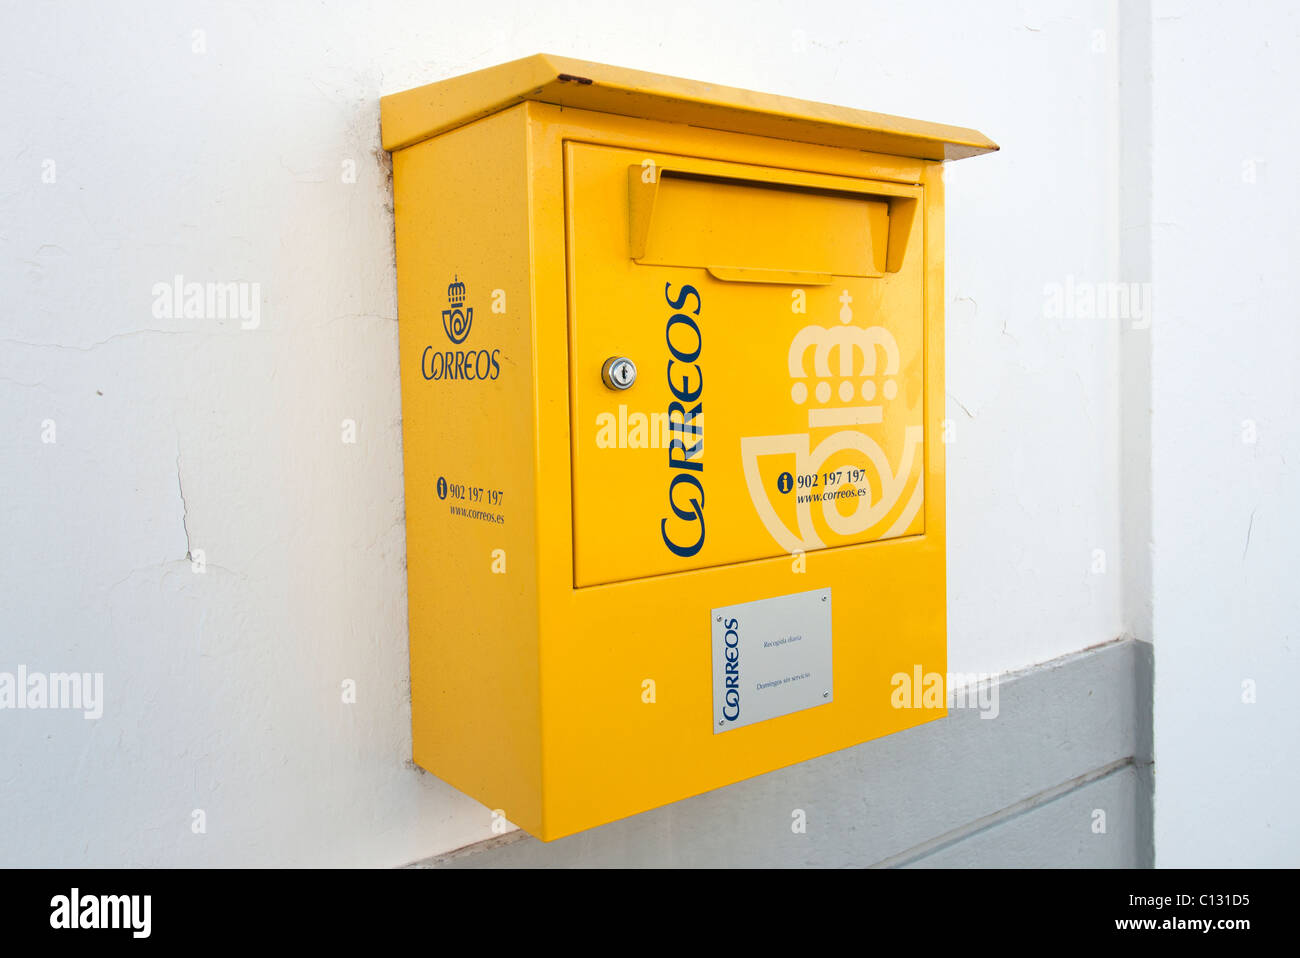 Correos Briefkasten, Lanzarote, Kanarische Inseln Stockfotografie - Alamy